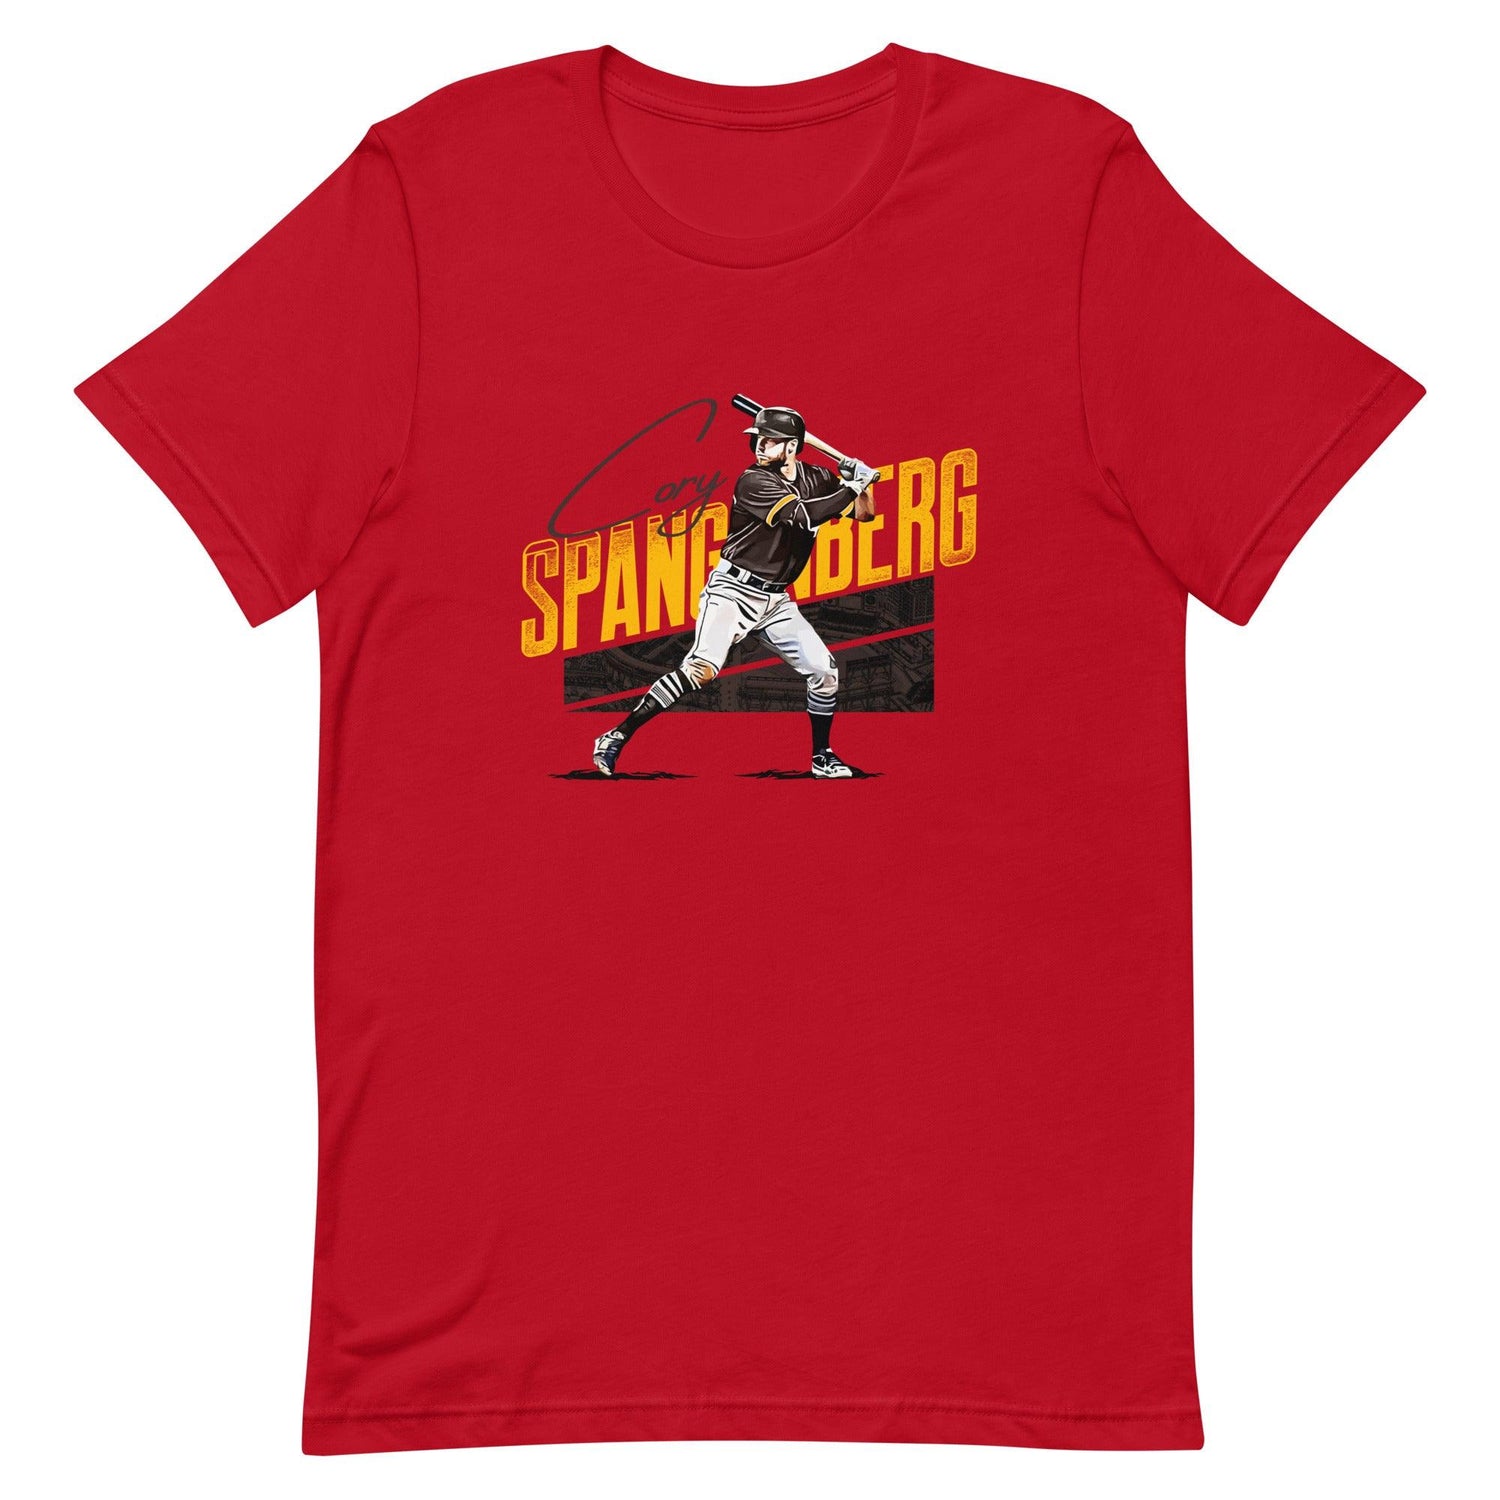 Cory Spangenberg "Gameday" t-shirt - Fan Arch